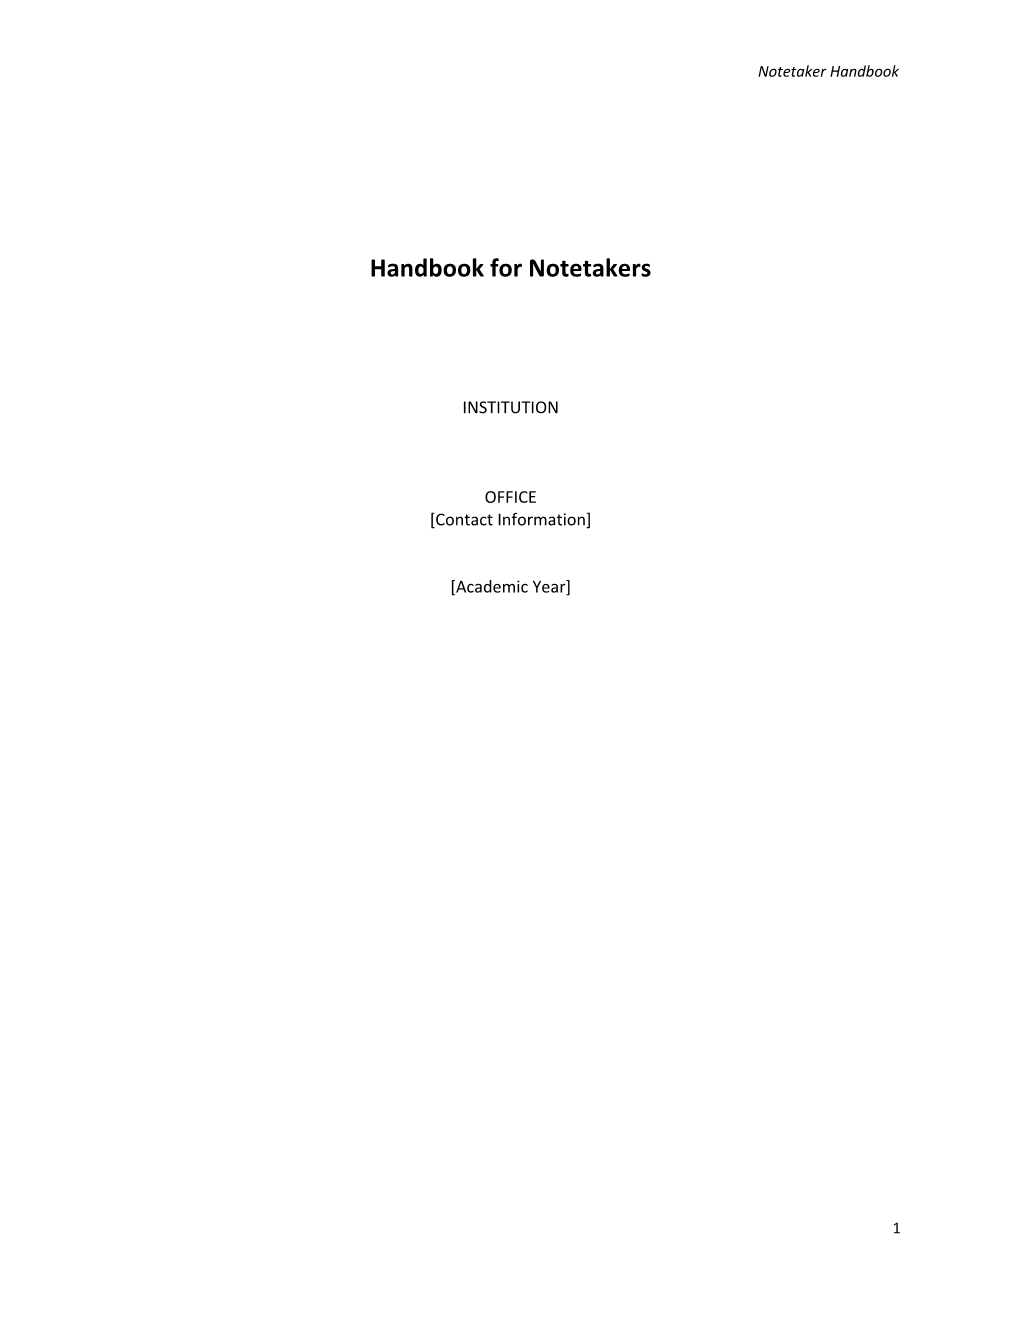 Handbook for Notetakers